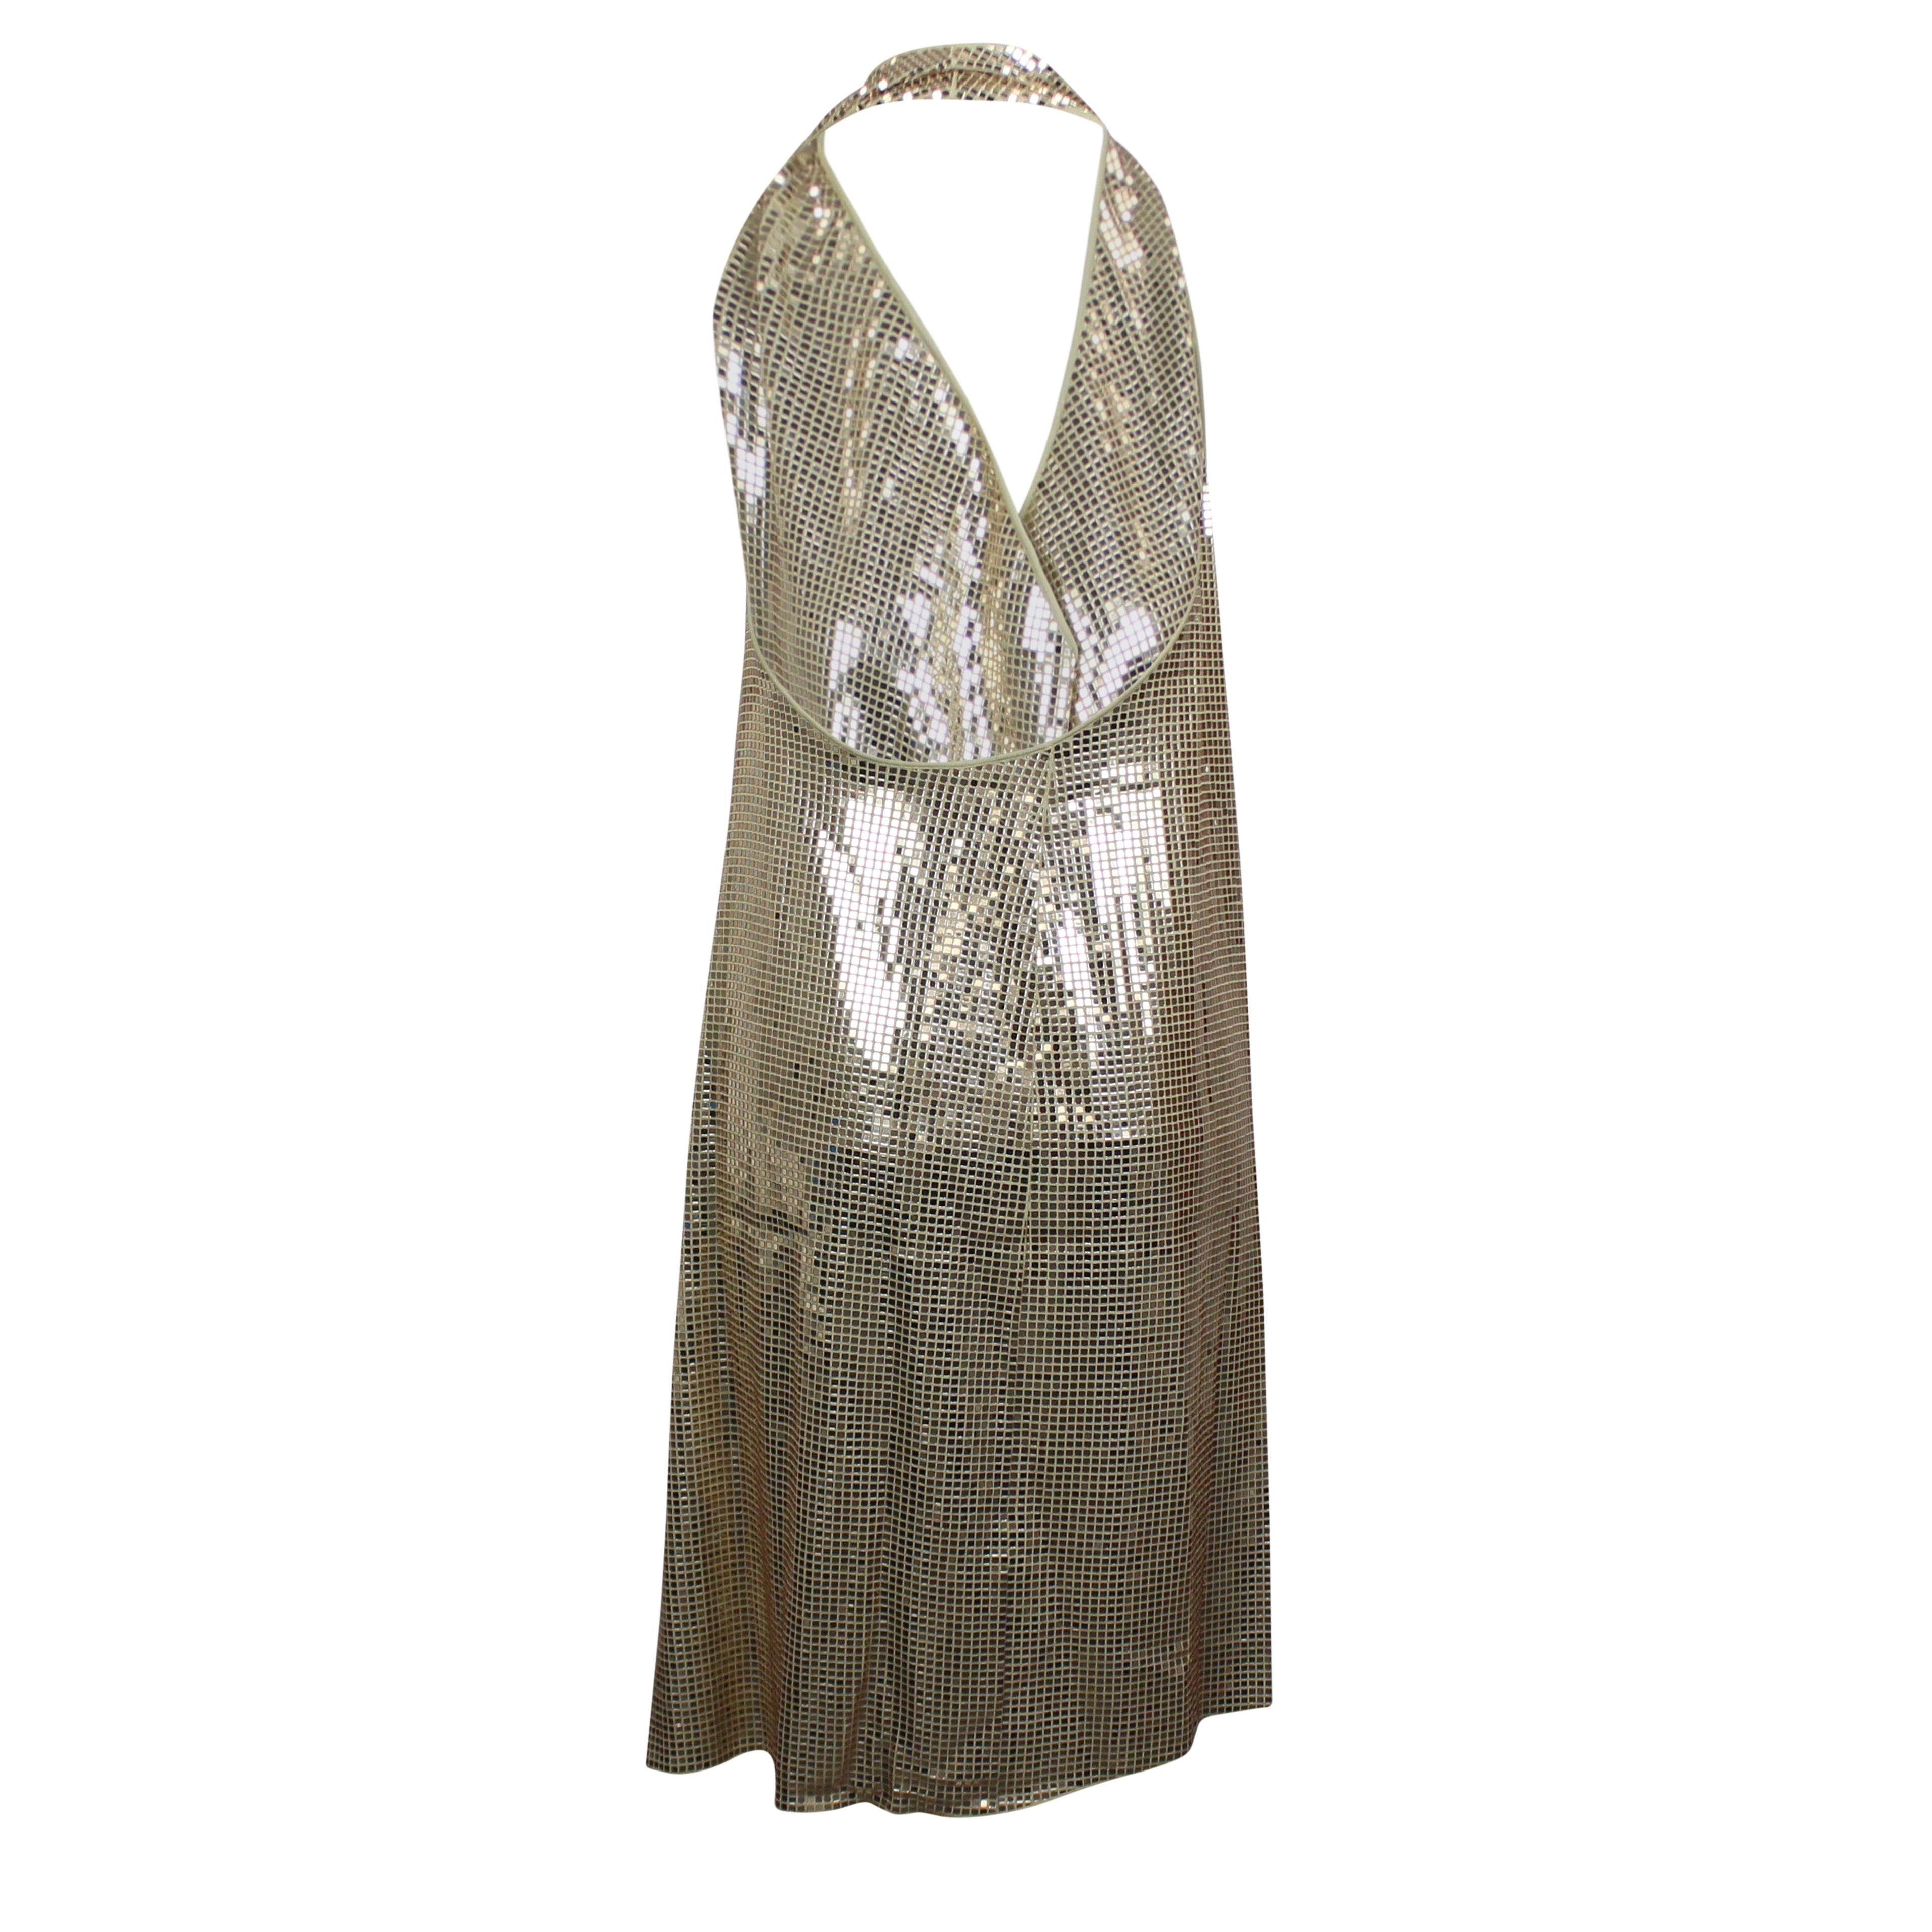 Alternate View 3 of Gold Drape Halter Sequin Mid Dress